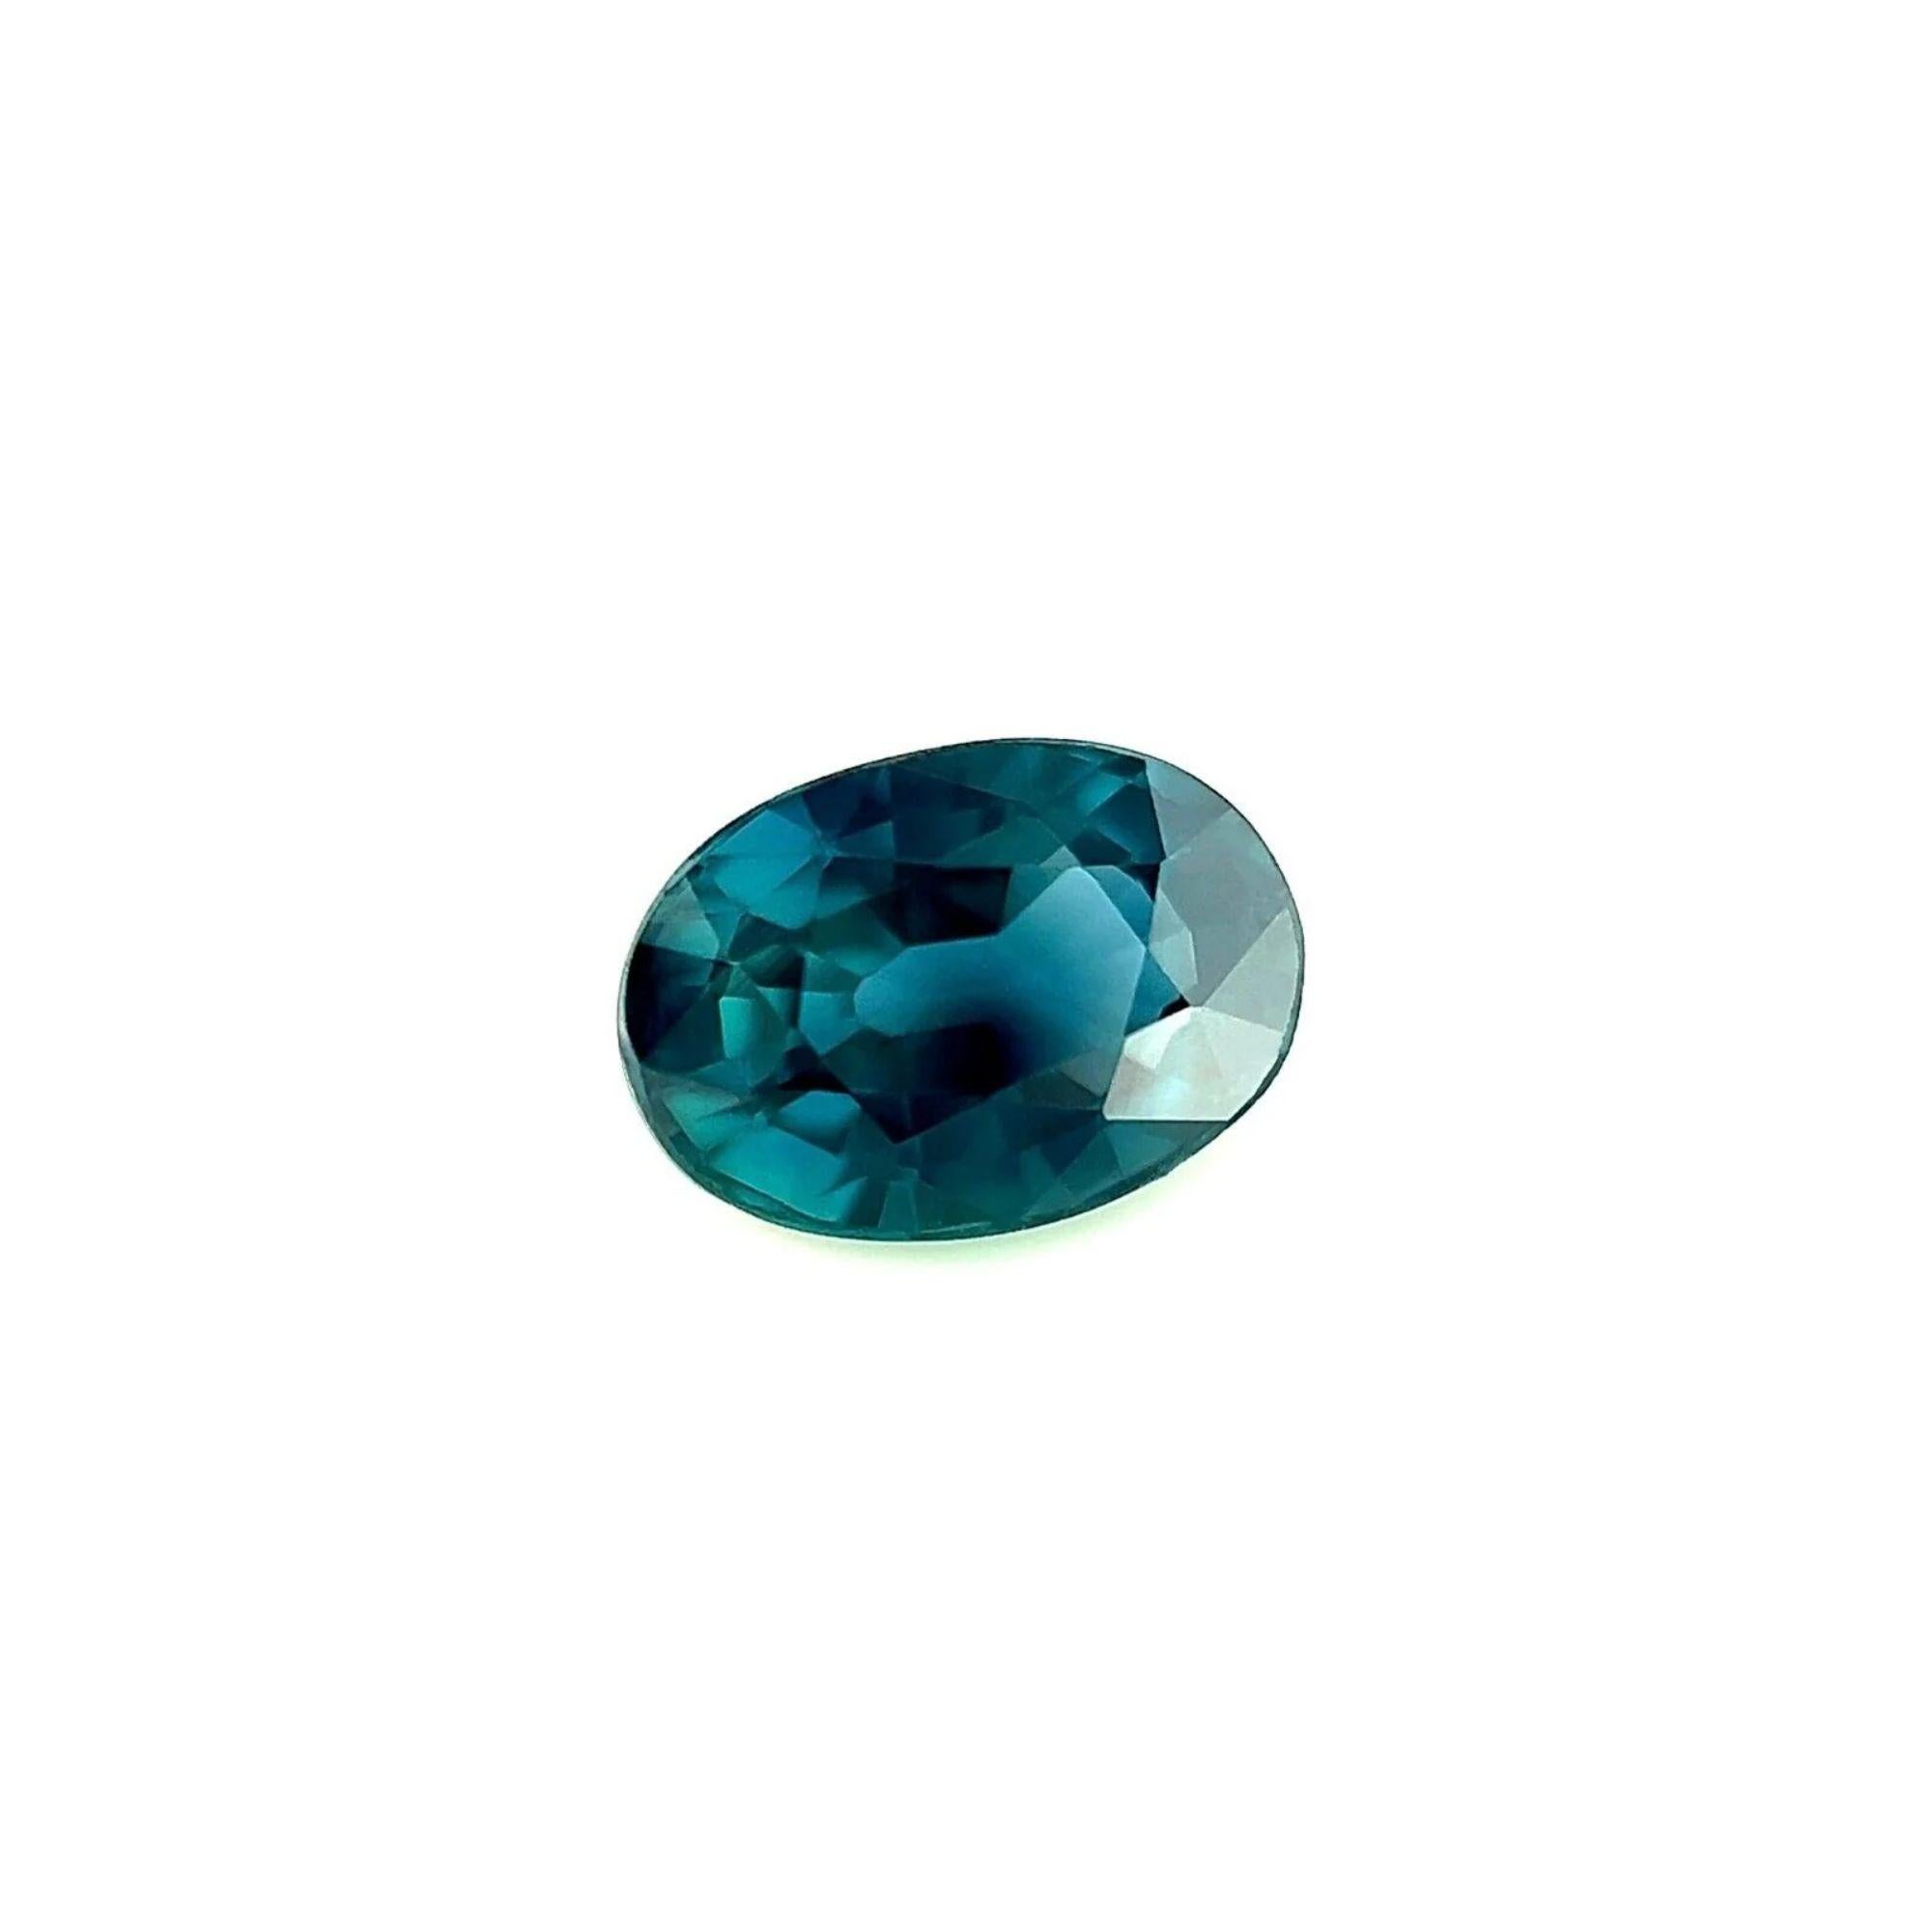 Pierre précieuse rare saphir bleu profond de taille ovale non traitée de 1,14 carat, certifiée GIA

Saphir bleu profond non traité certifié par la GIA.
Saphir non chauffé de 1,14 carat d'un bleu profond. Une pierre précieuse unique et de première